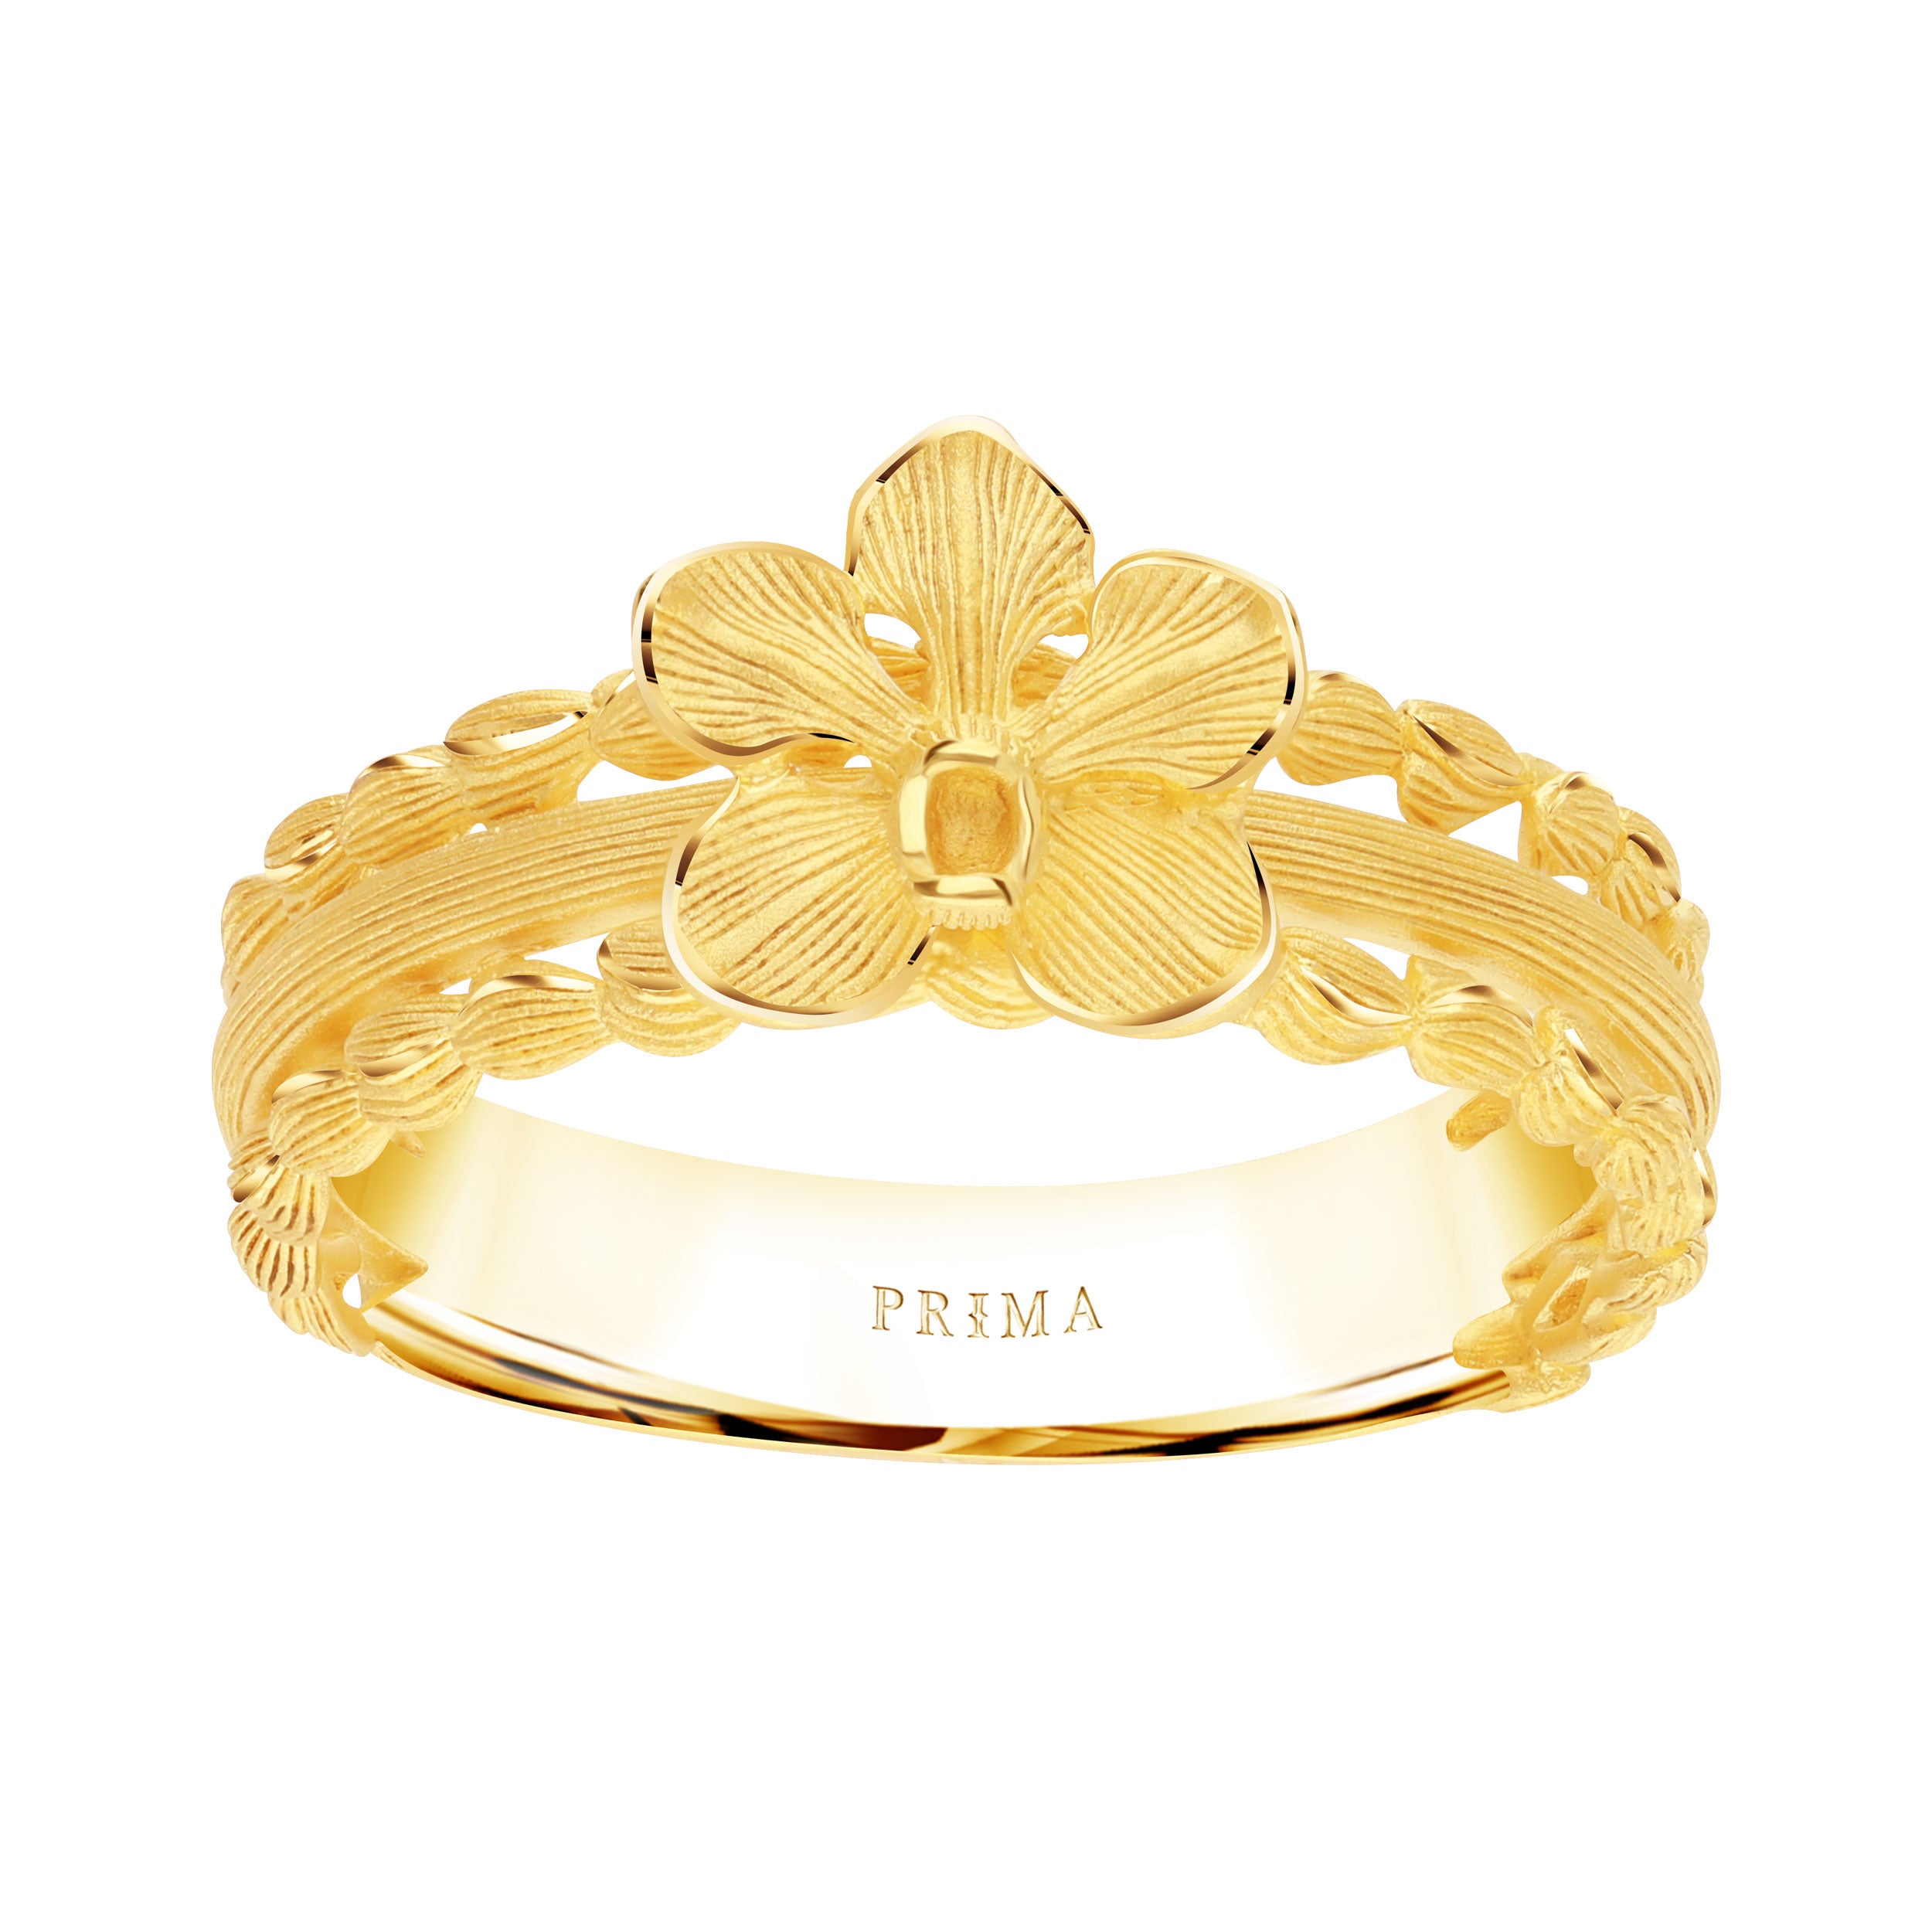 Senco Gold & Diamonds Filigree In Personality Gold Mens Ring : Amazon.in:  Jewellery